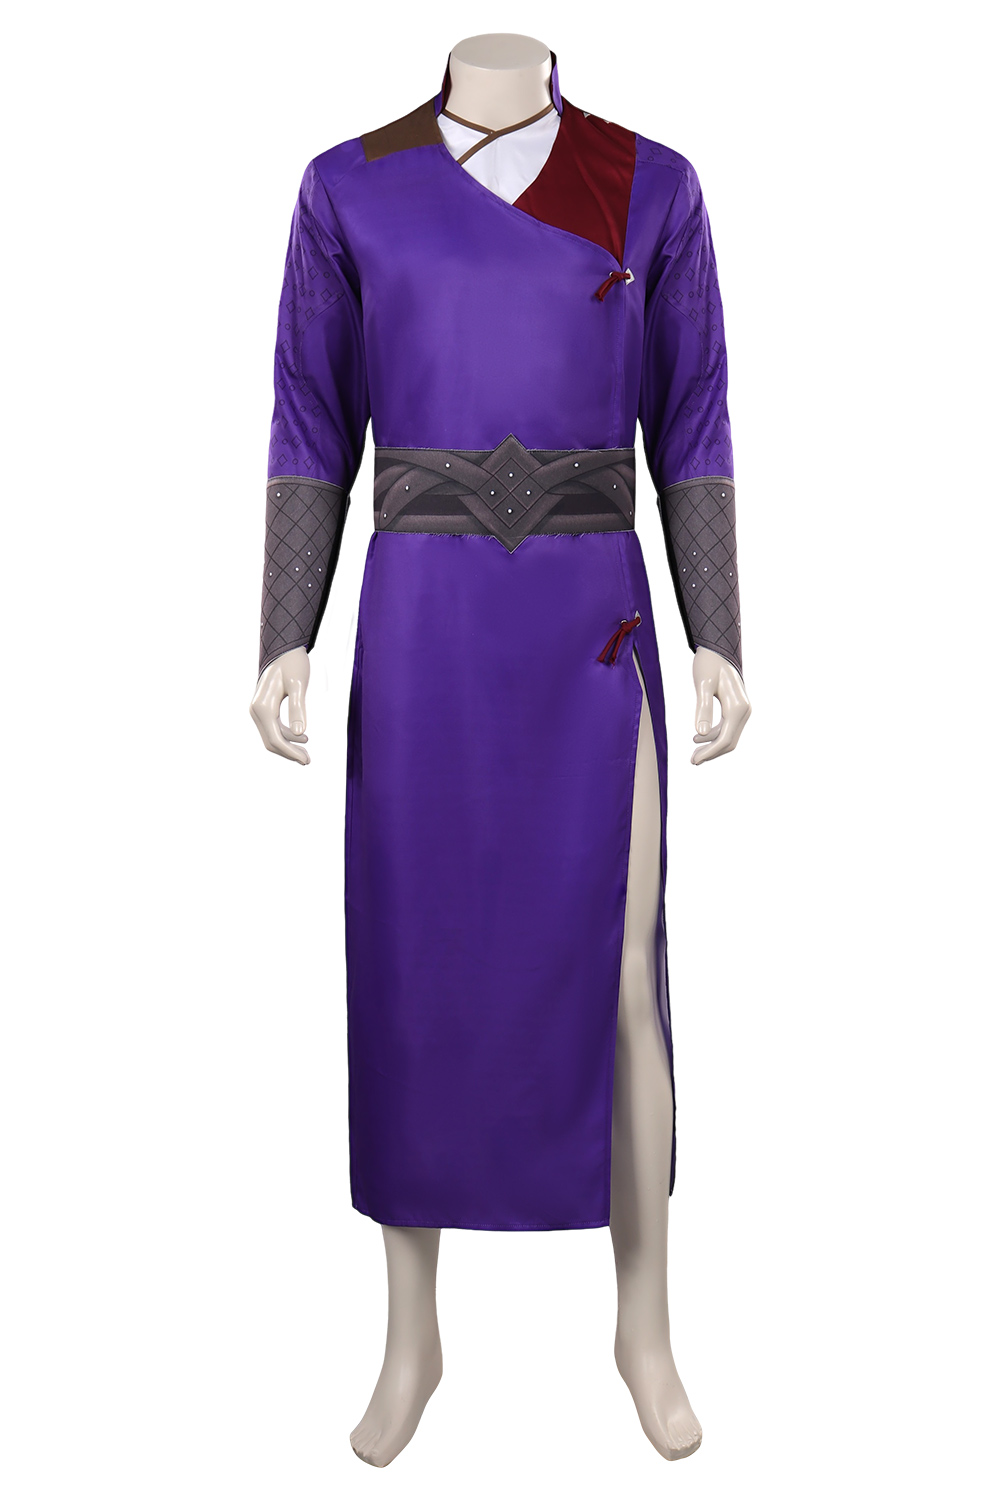 Game Baldur's Gate Gala Purple Outfits Halloween Carnival Suit Cosplay Costume